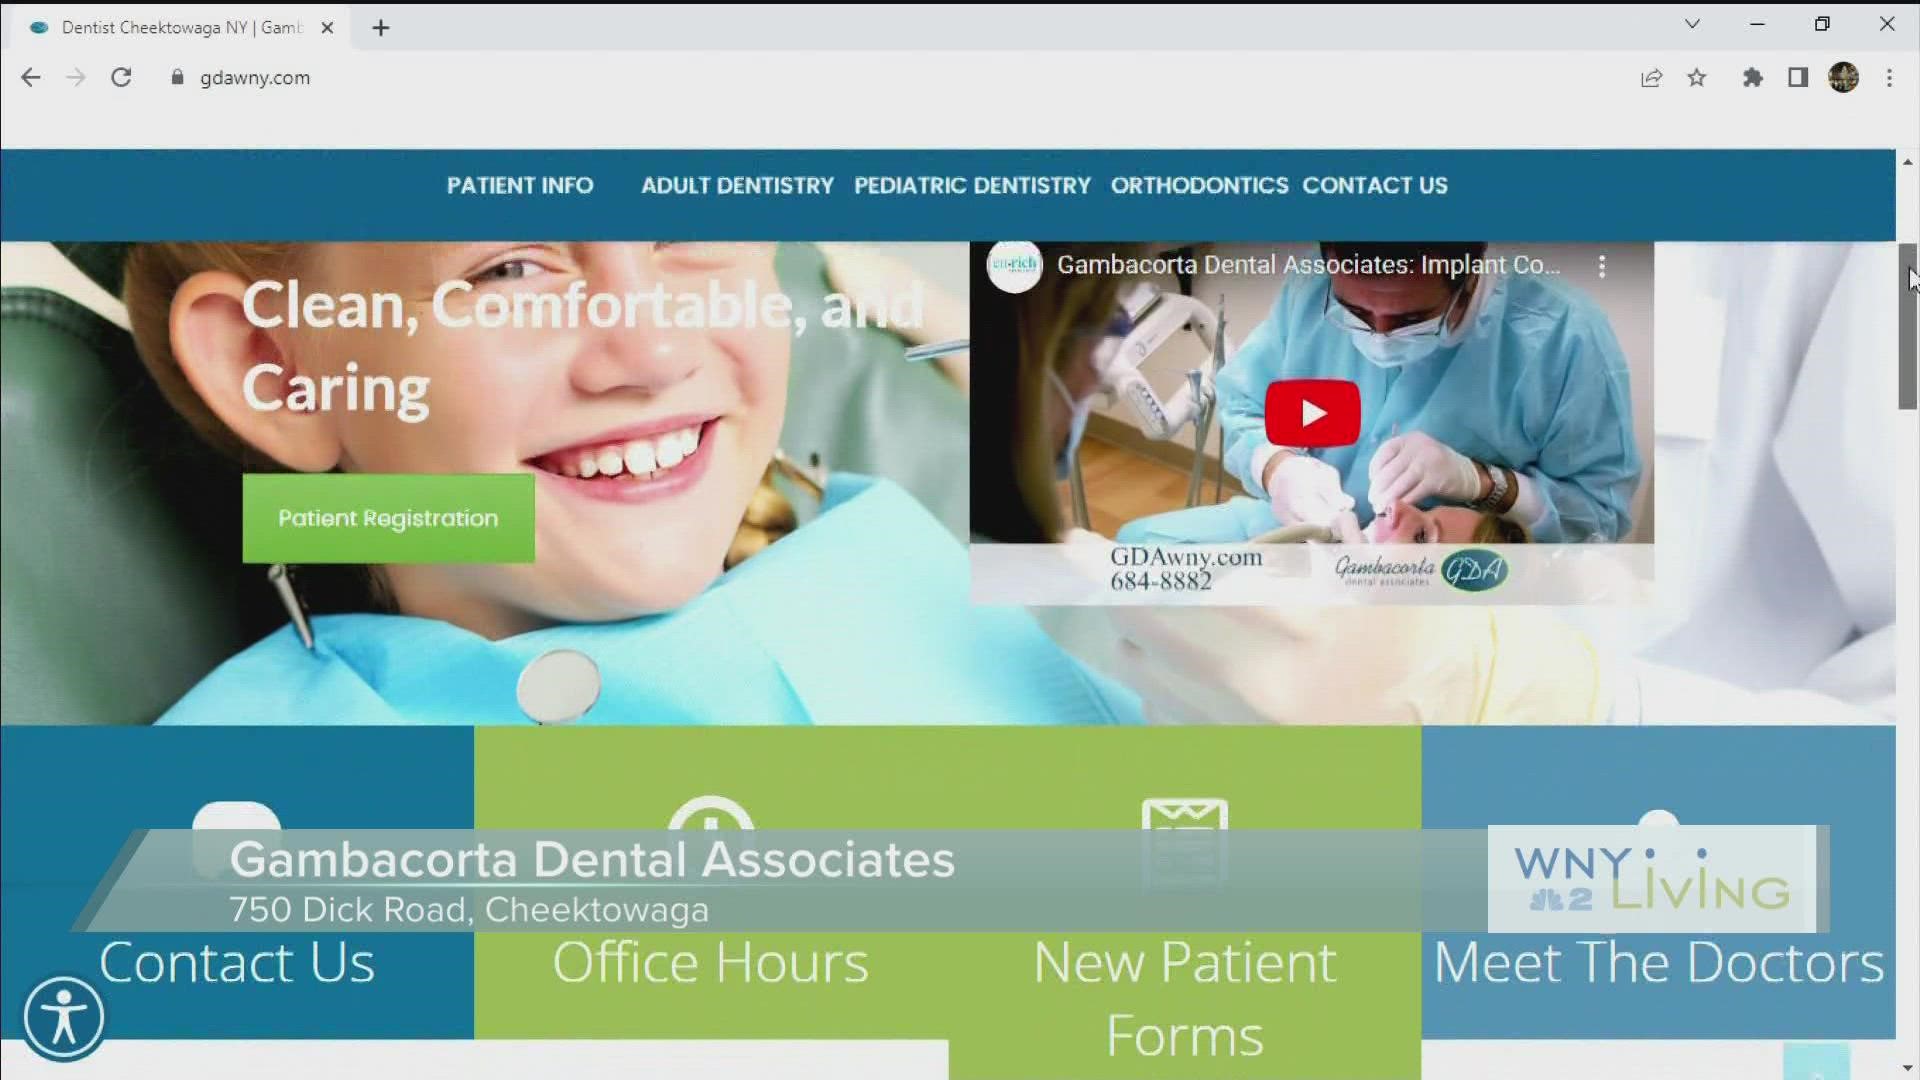 WNY Living - September 17 - Gambacorta Dental Associates (THIS VIDEO IS SPONSORED BY GAMBACORTA DENTAL ASSOCIATES)